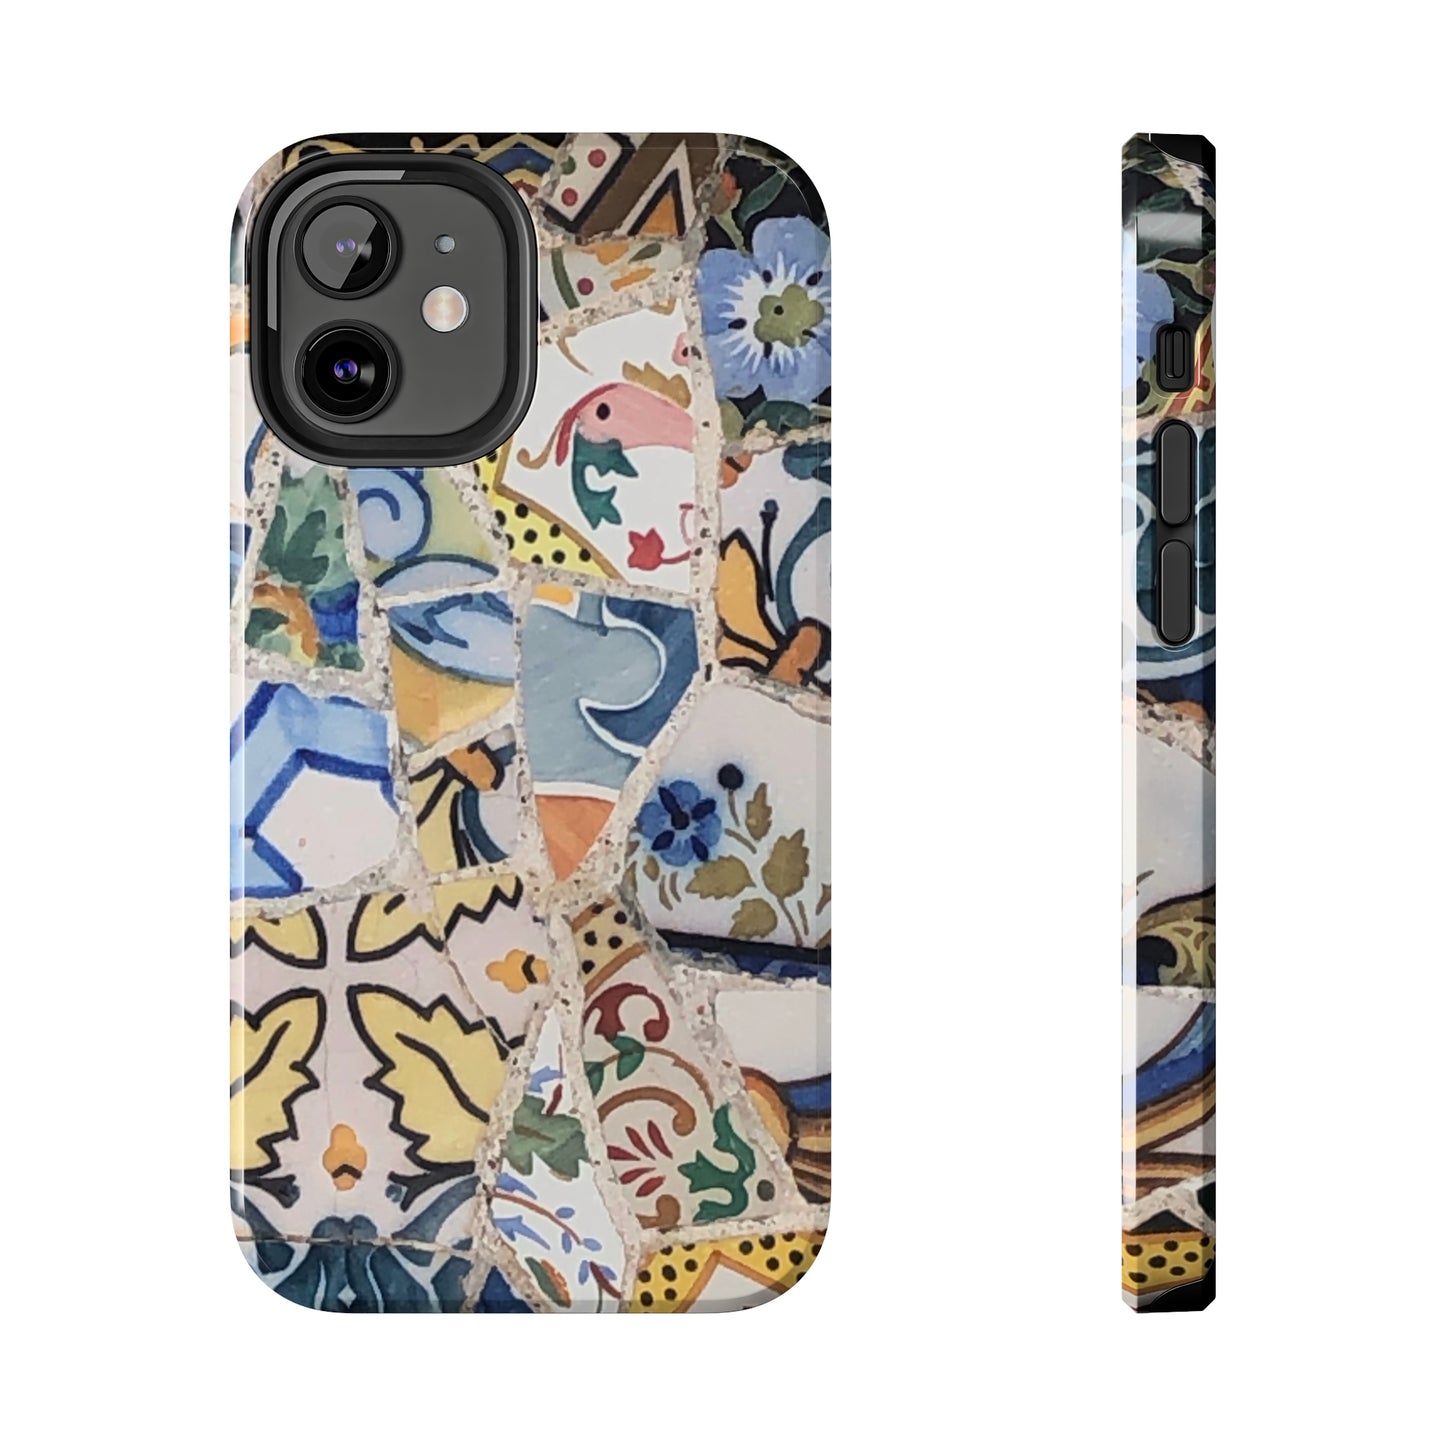 Mosaic Phone Case 6035